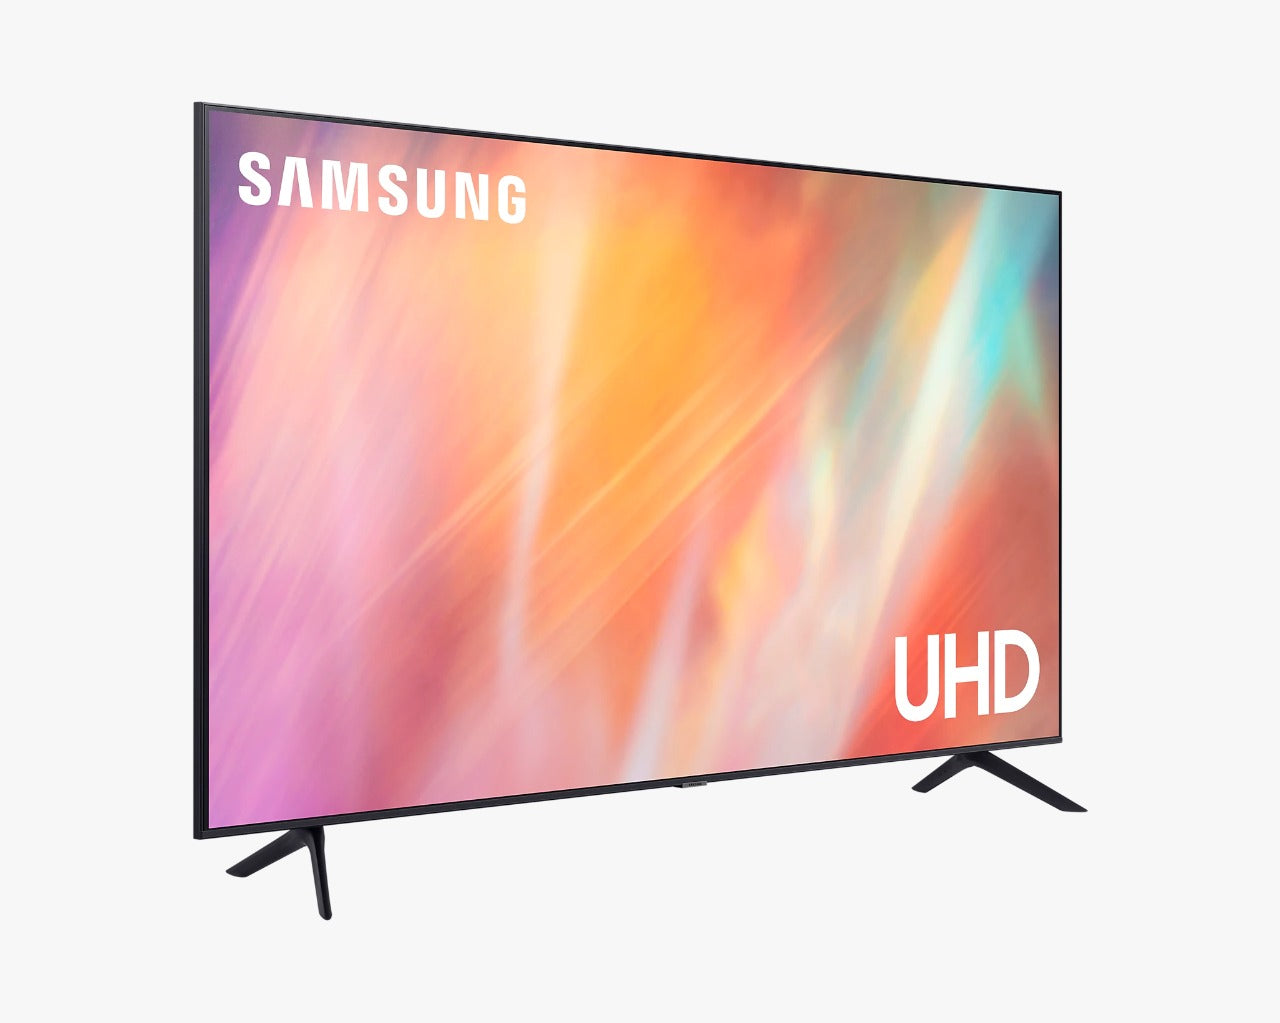 Samsung 1m 78cm AU7700 Crystal 4K UHD Smart TV